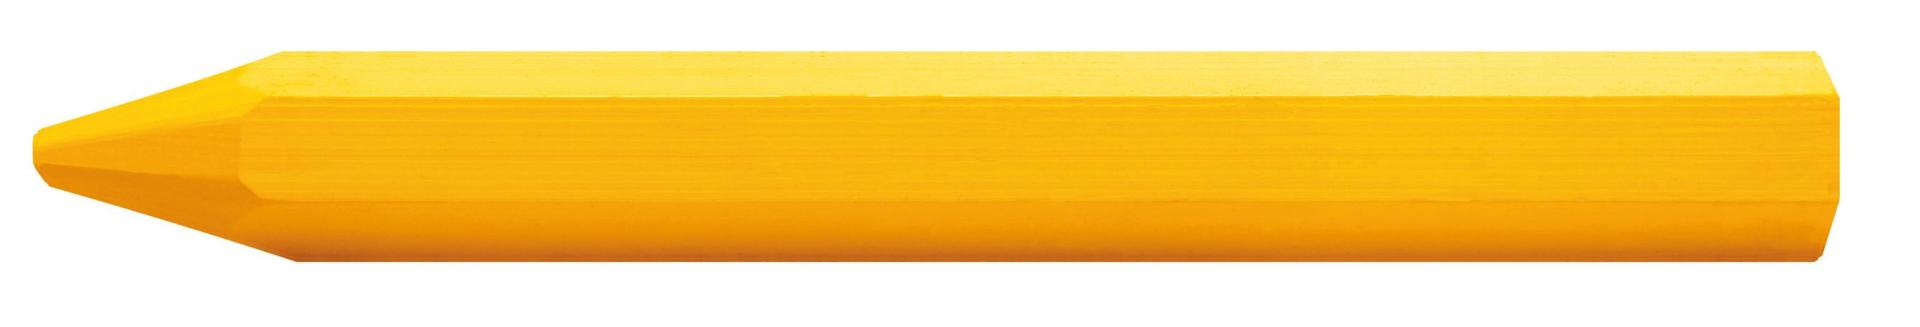 craie-a-marquer-jaune-12-bte-4850007-omyacolor-1